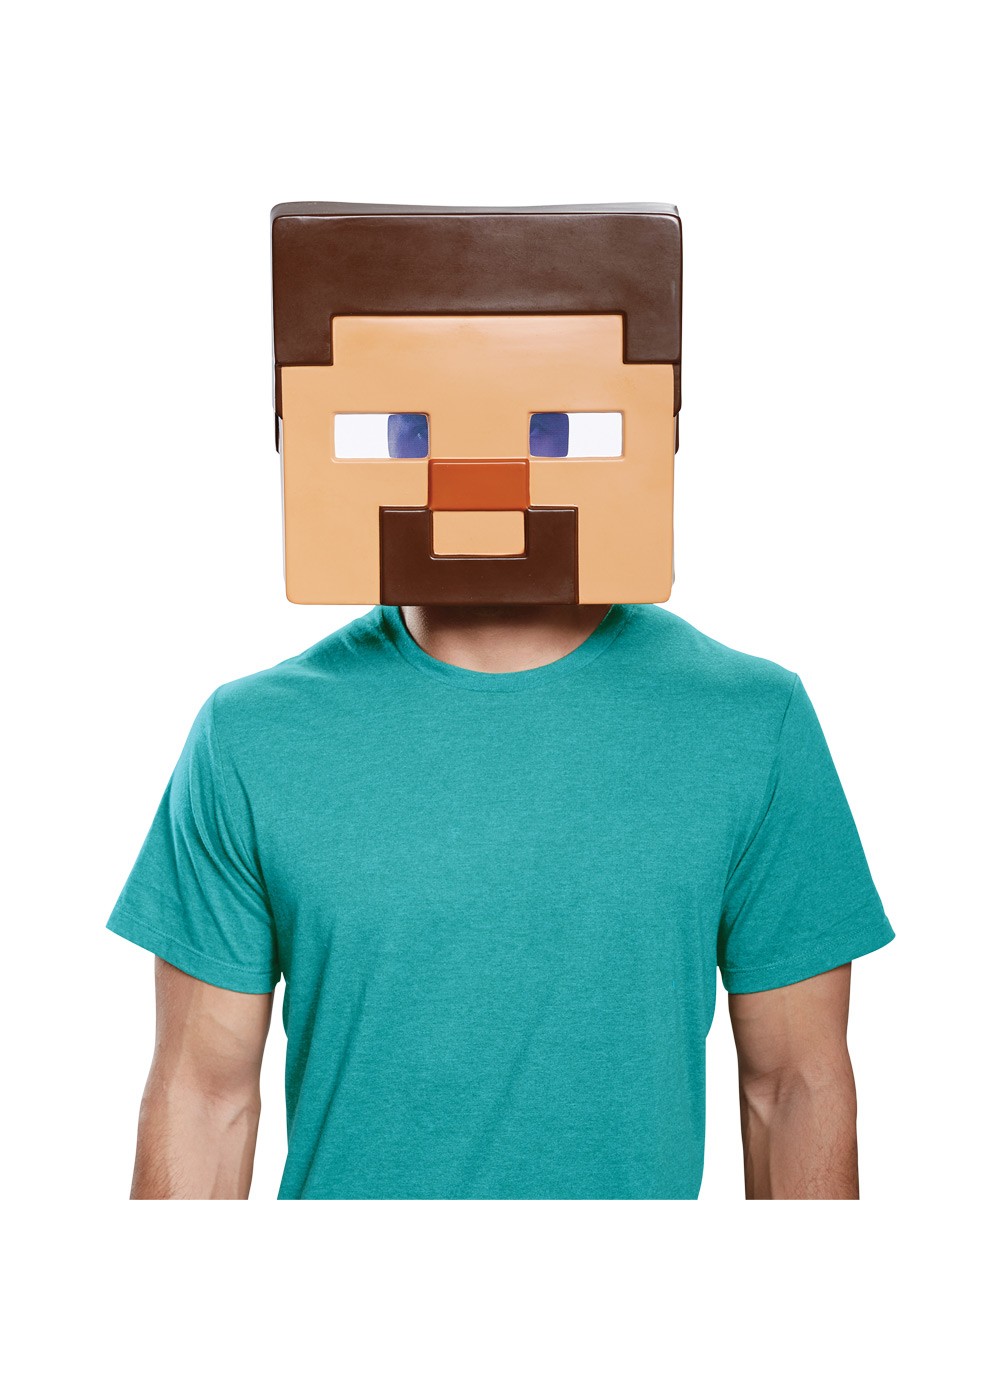 Minecraft Steve Mens Mask